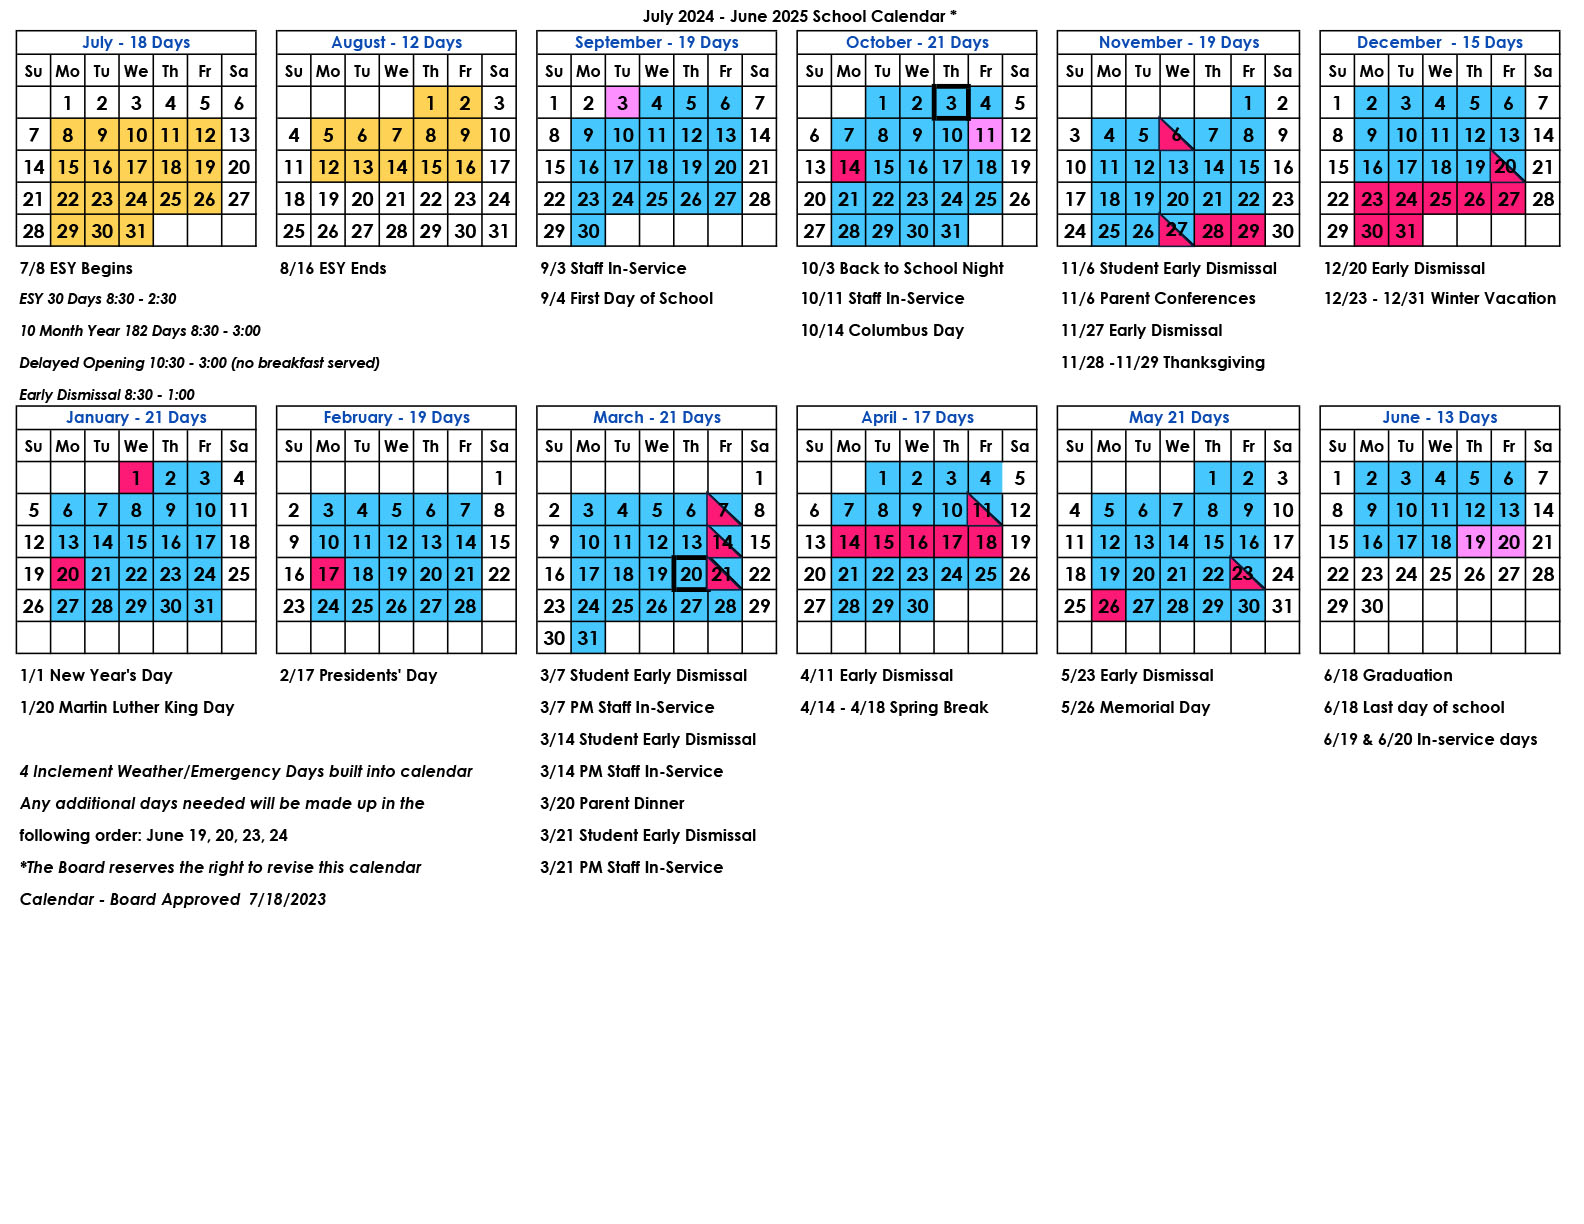 2023-2024 Academic Calendar grid